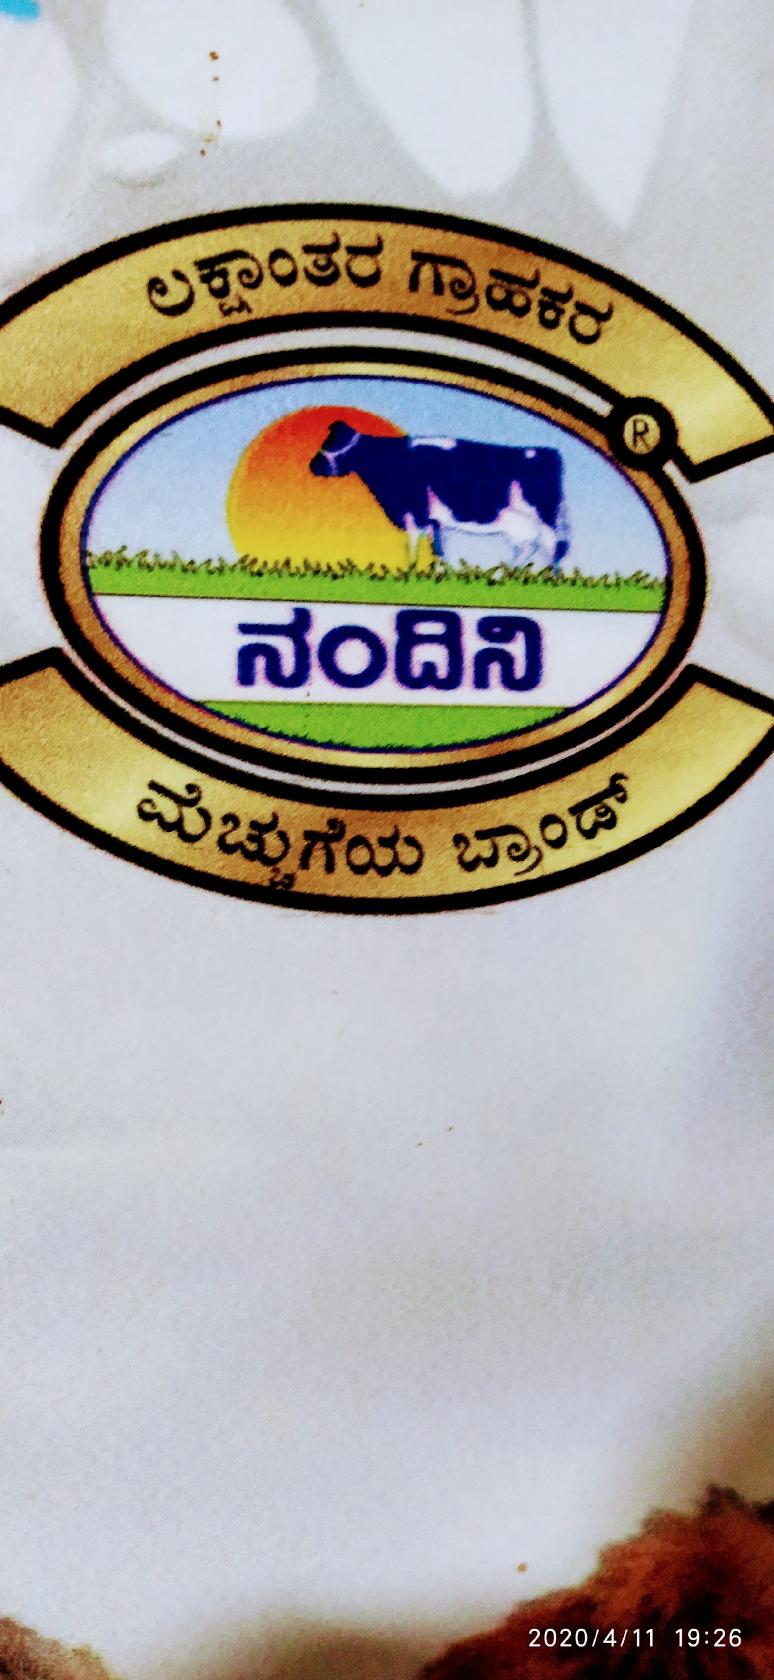 DNA | Know all about Karnataka's 'Nandini' milk brand